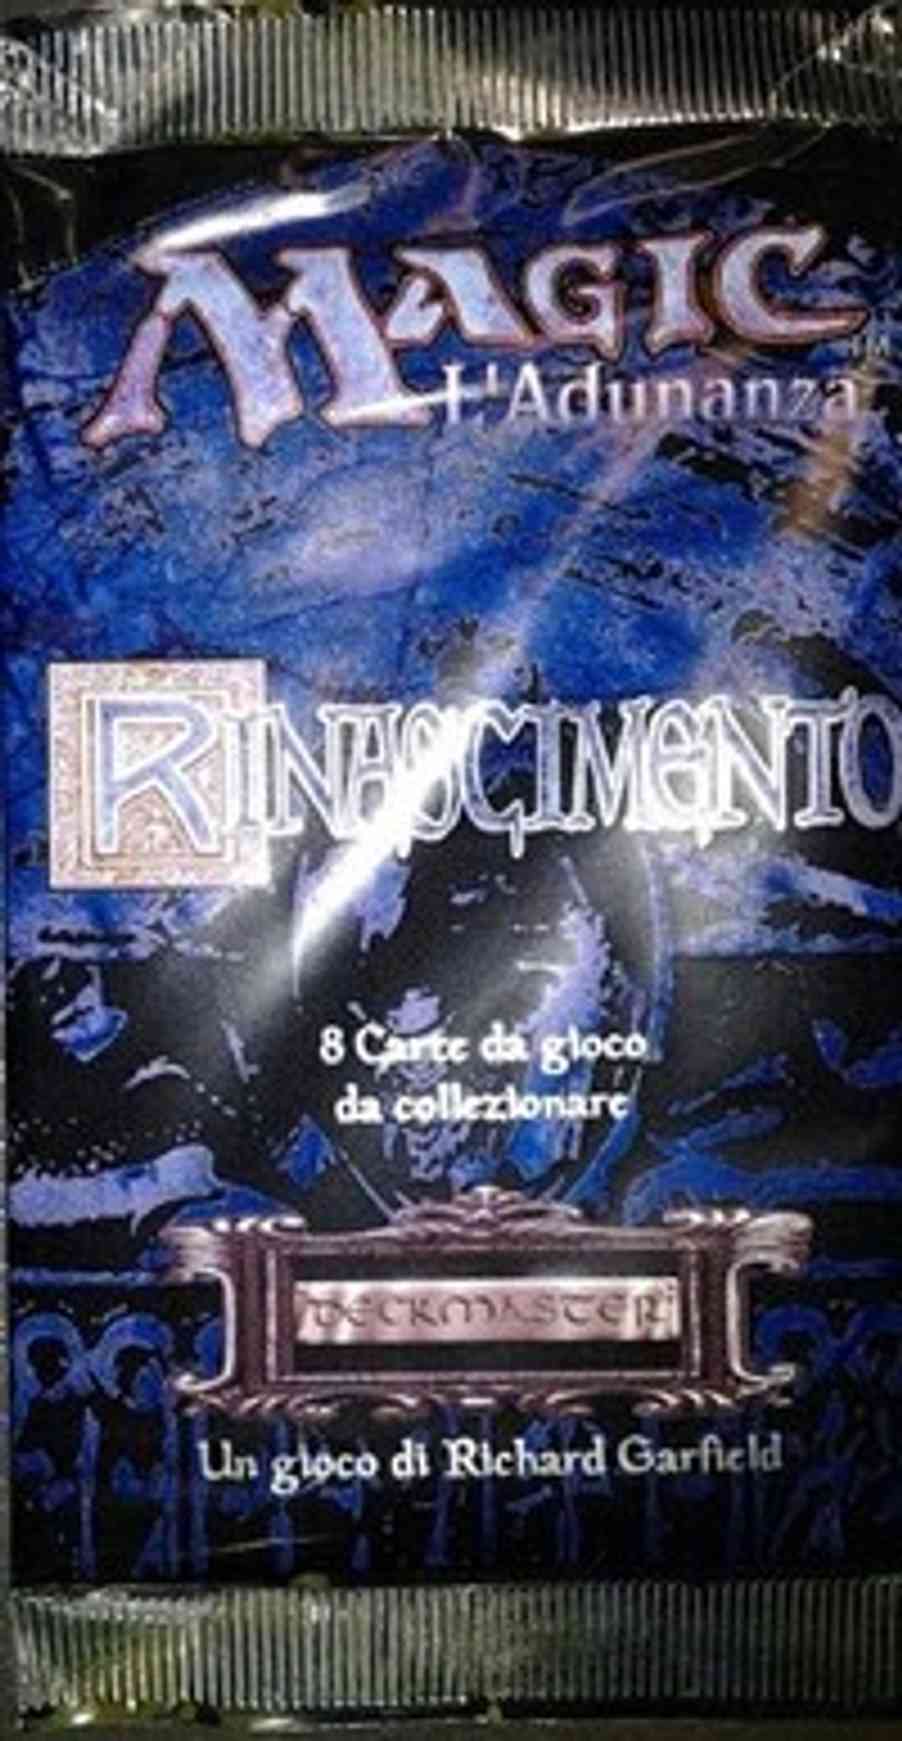 Renaissance - Italian Booster Pack magic card front